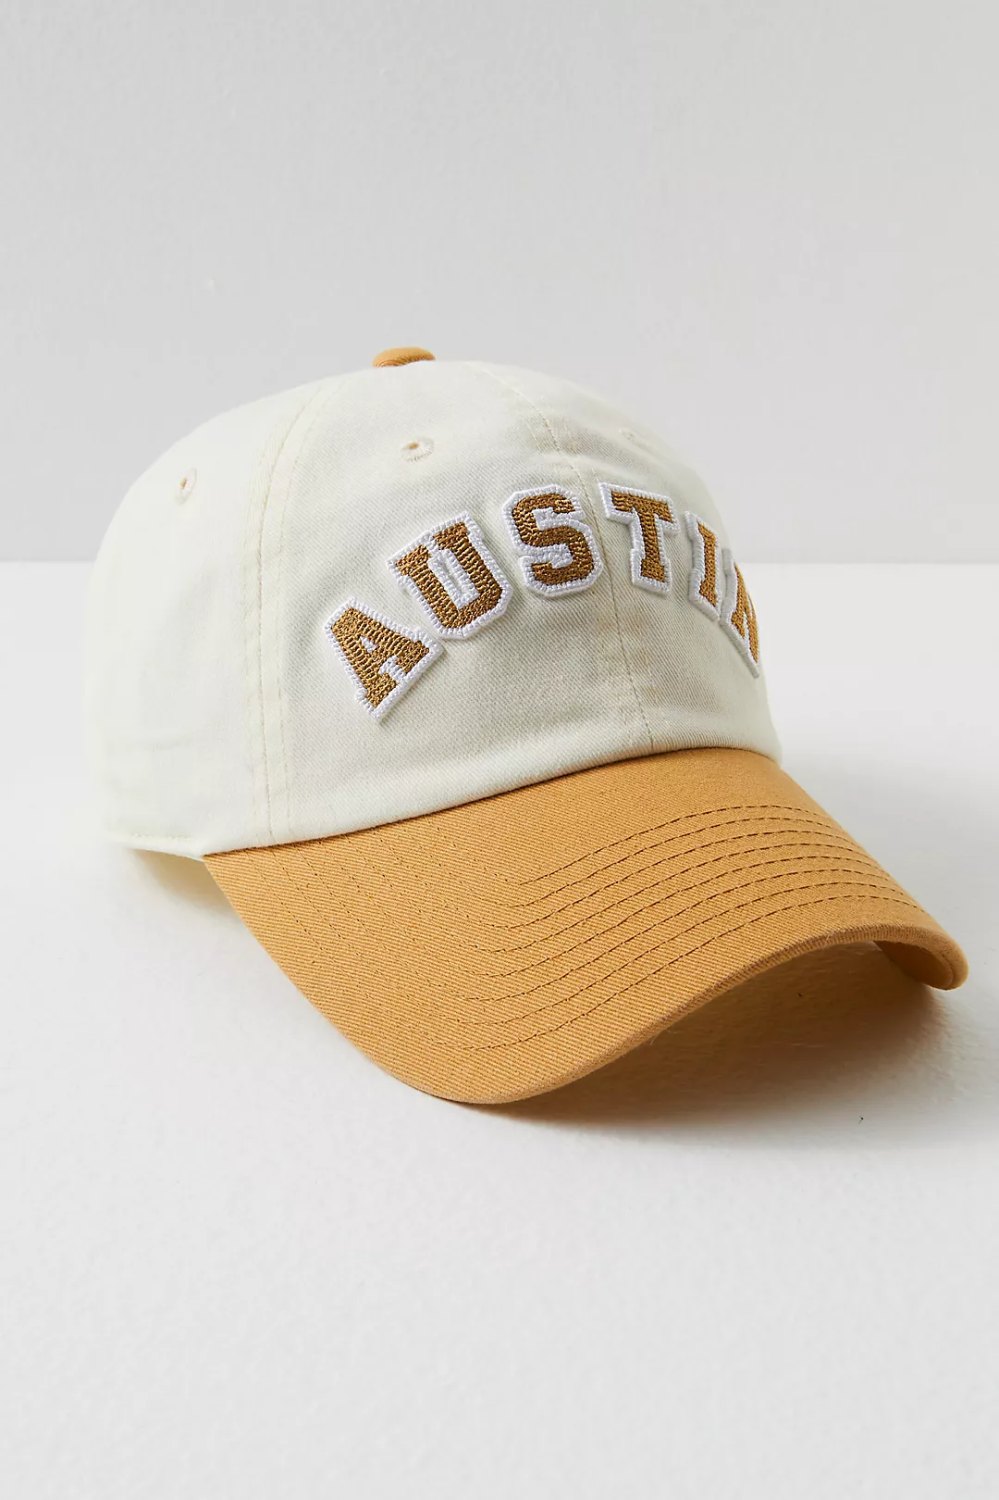 Austin baseball cap